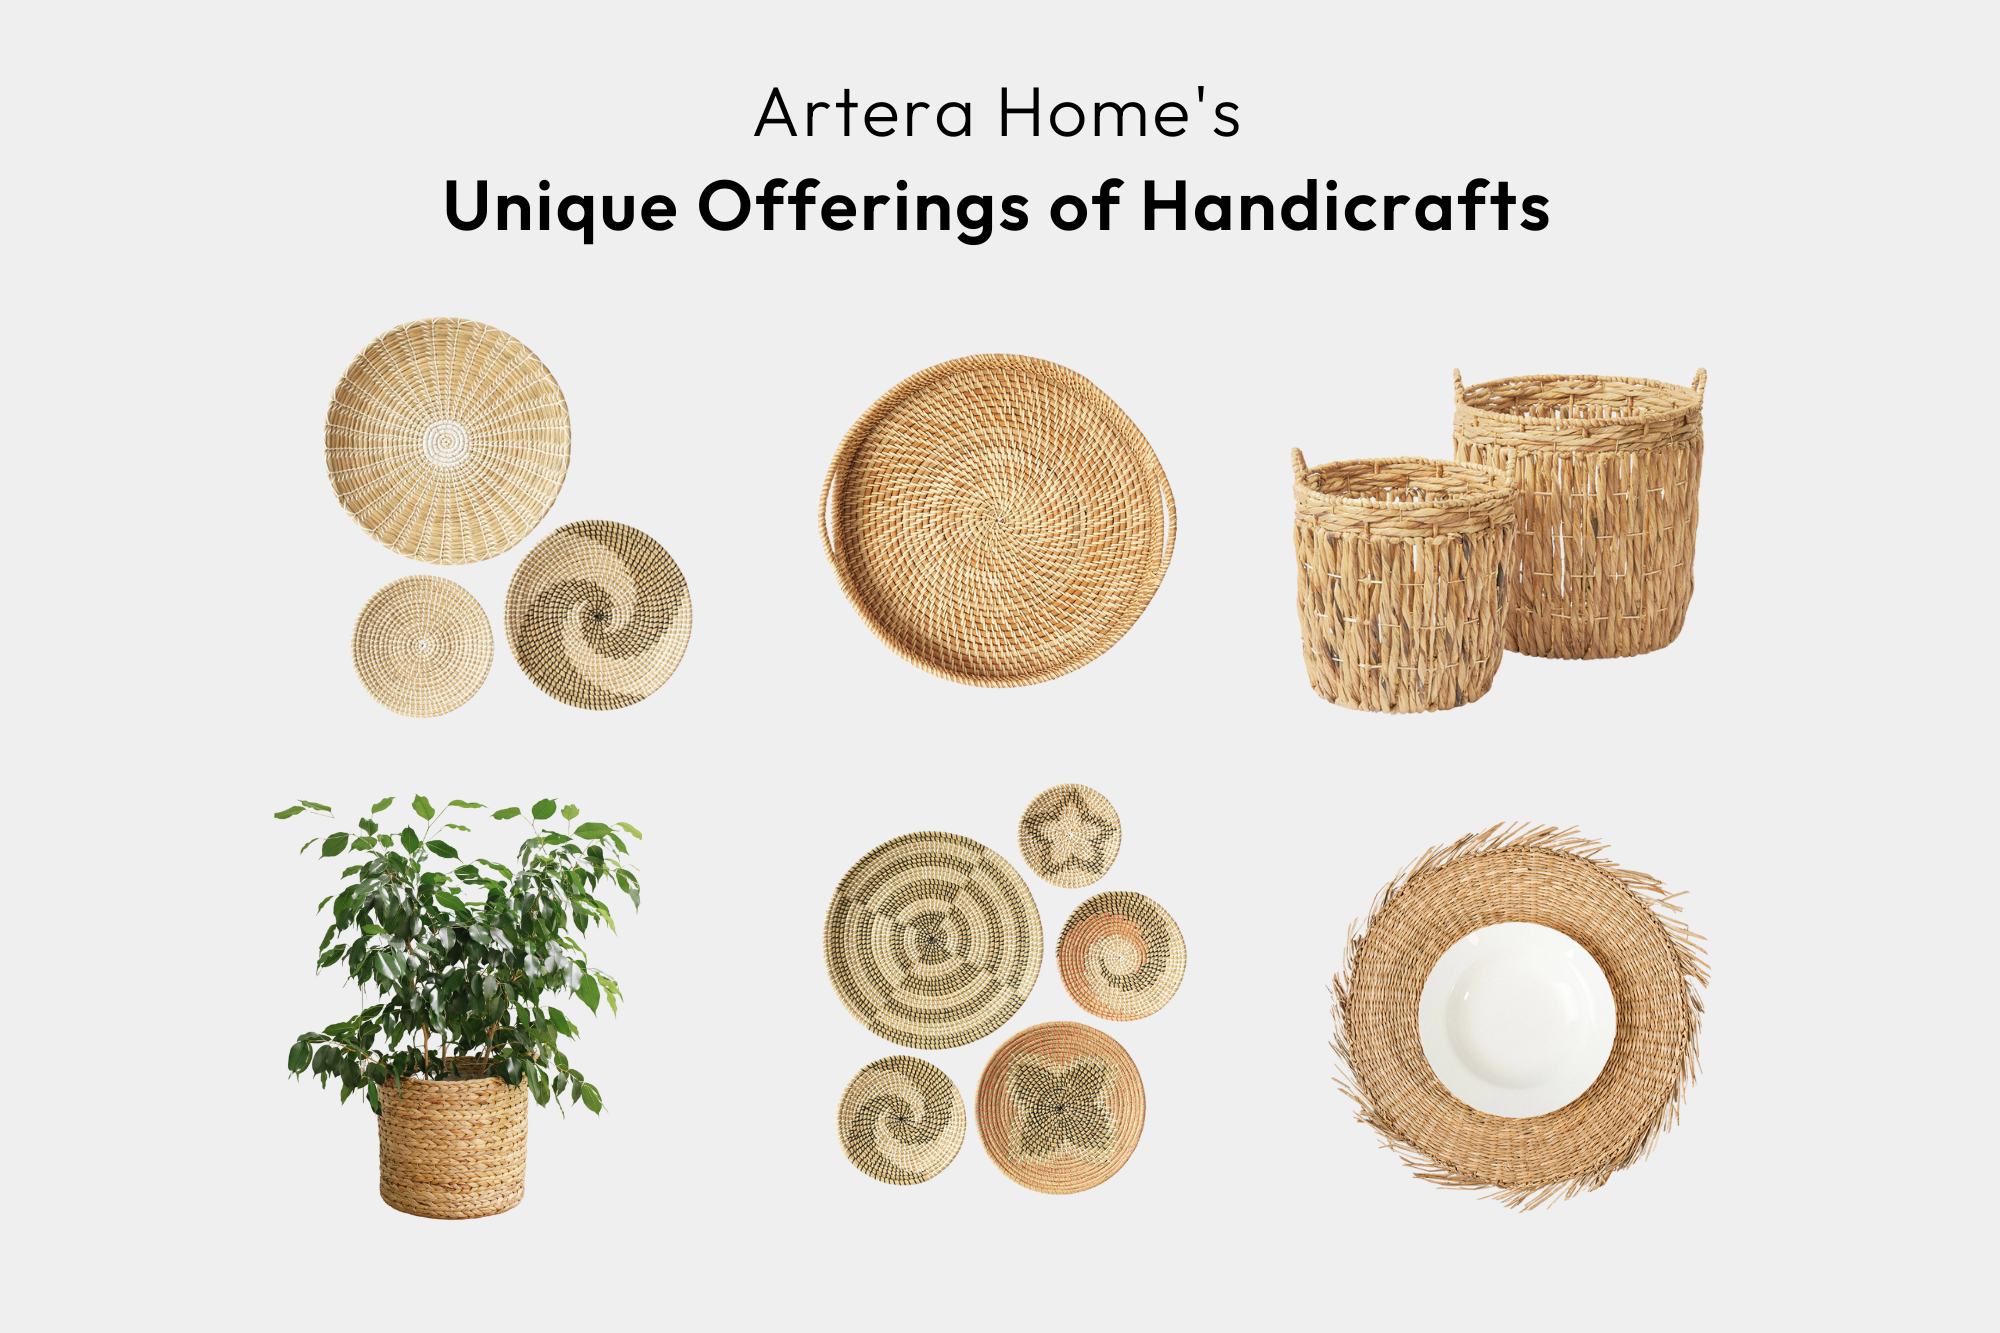 Wholesale interior designer supplies and home decor from Artera Home